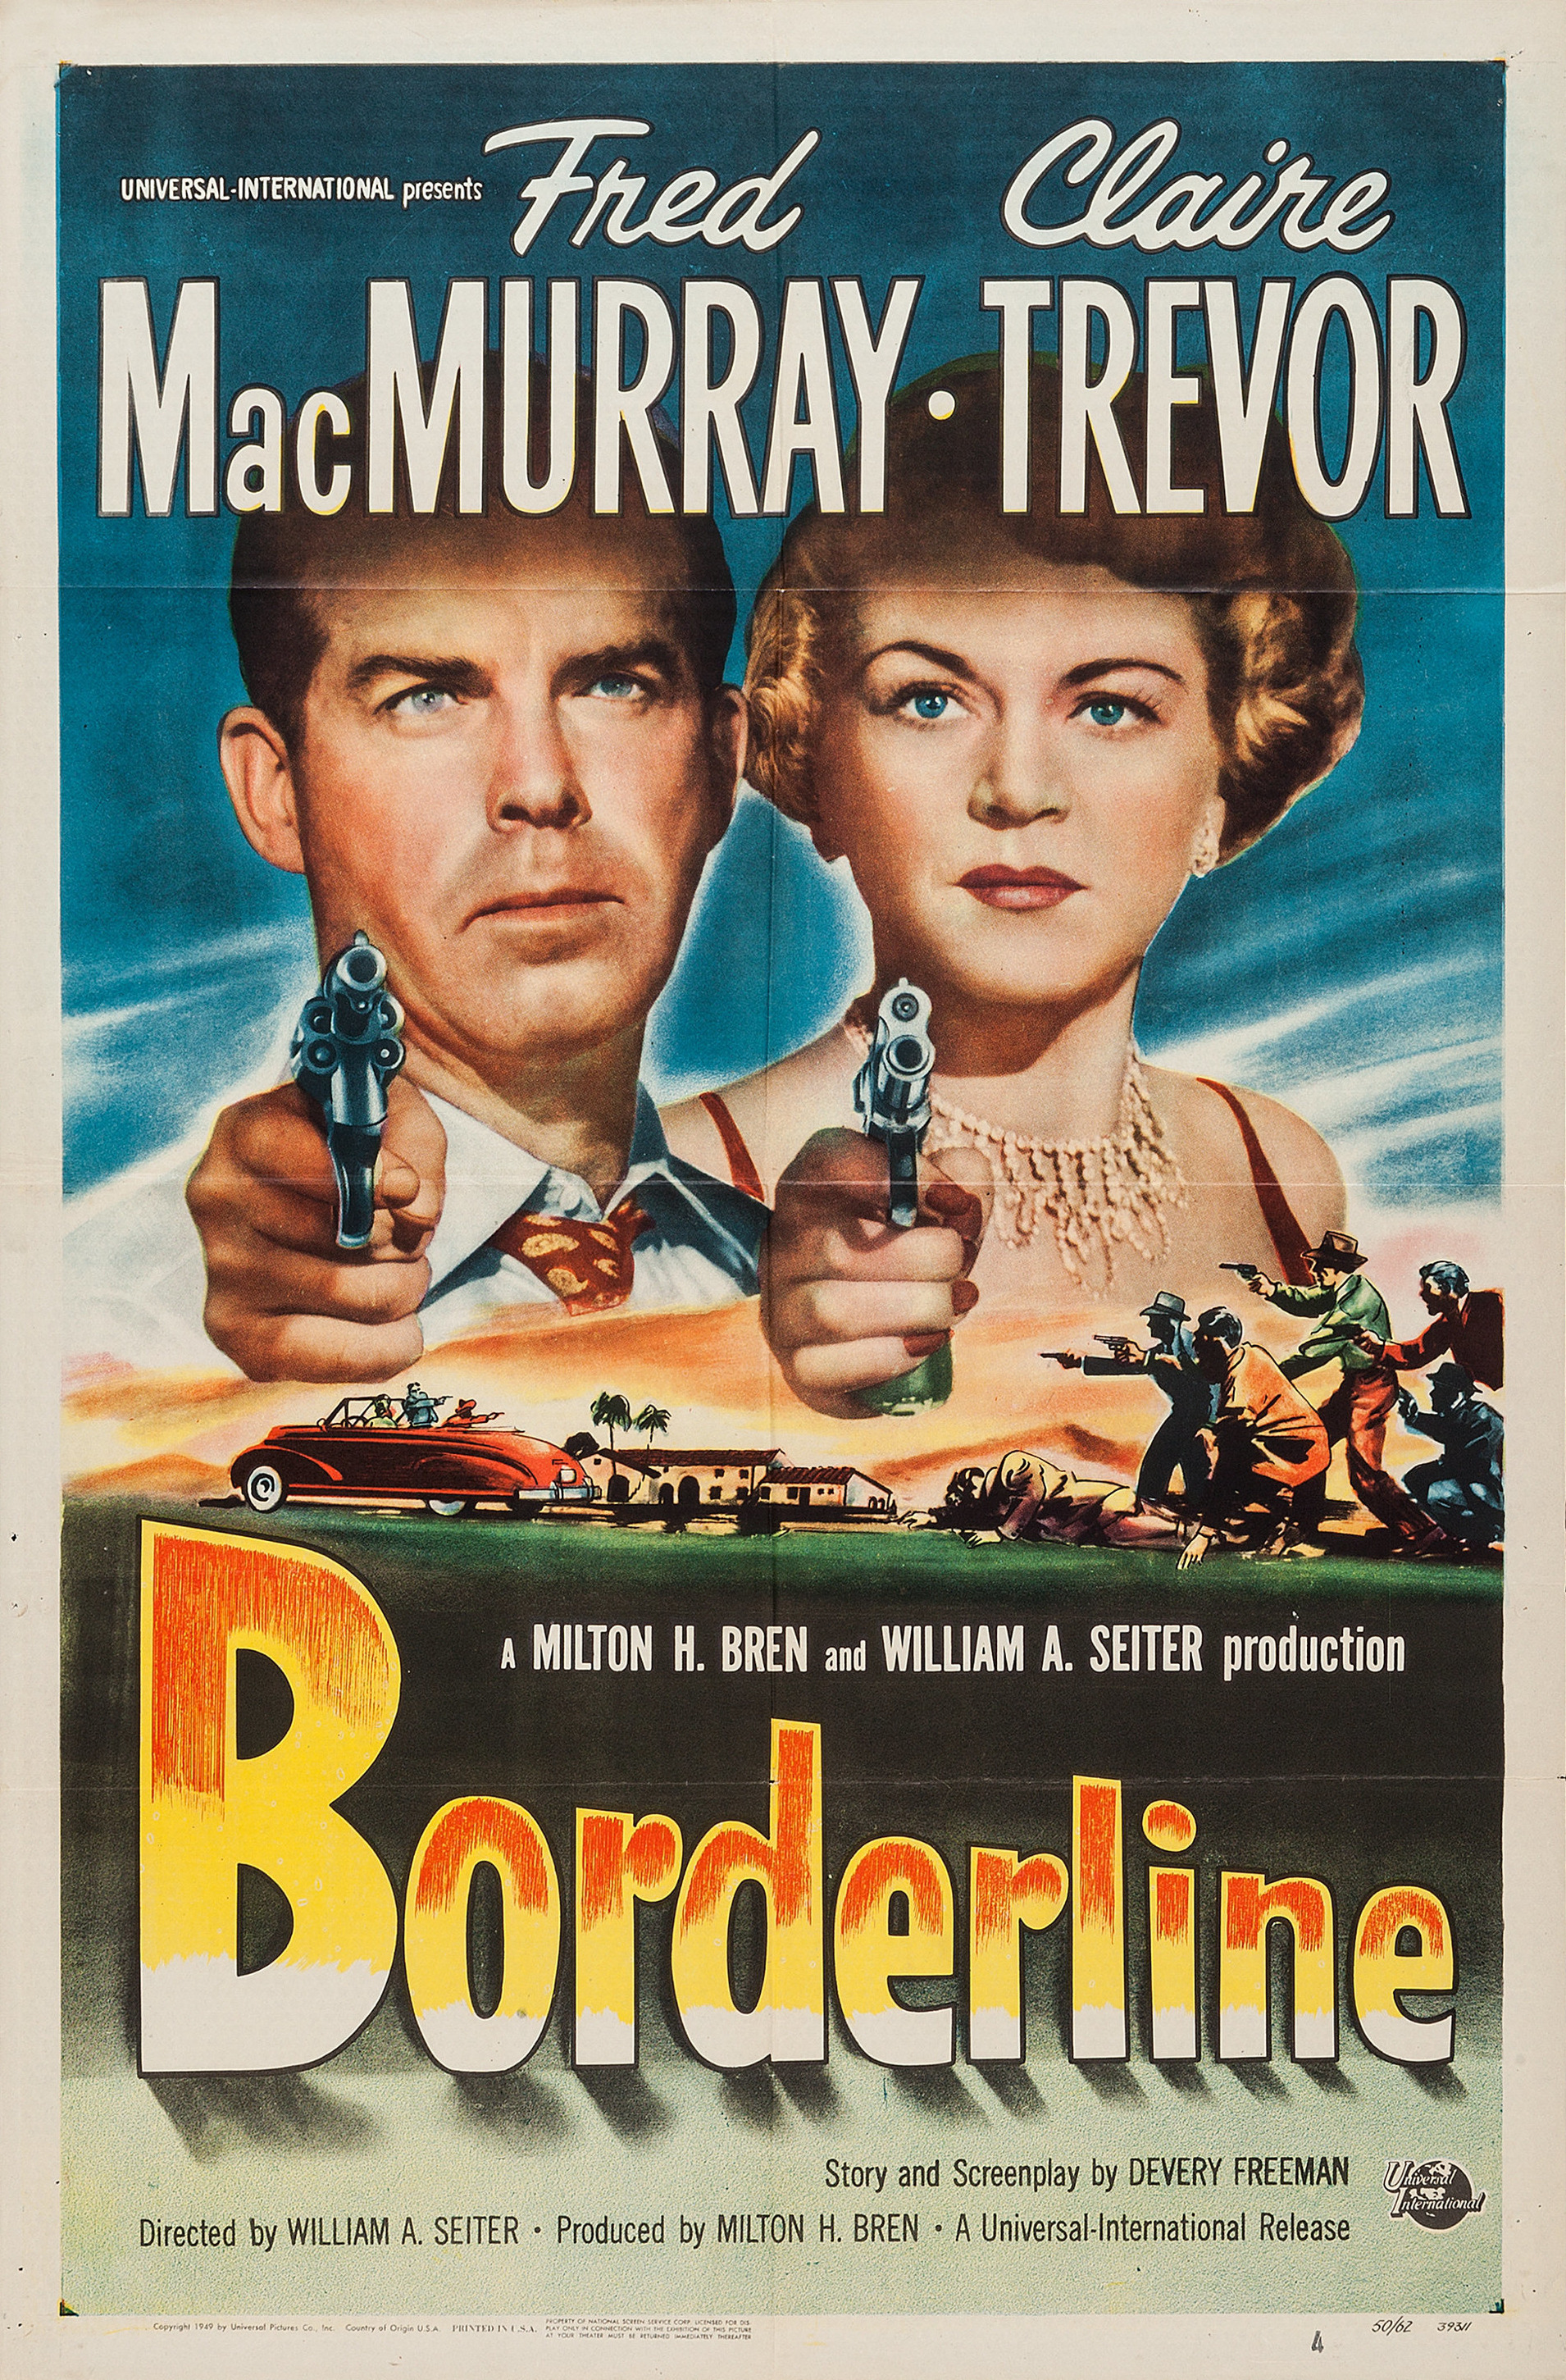 Mega Sized Movie Poster Image for Borderline 